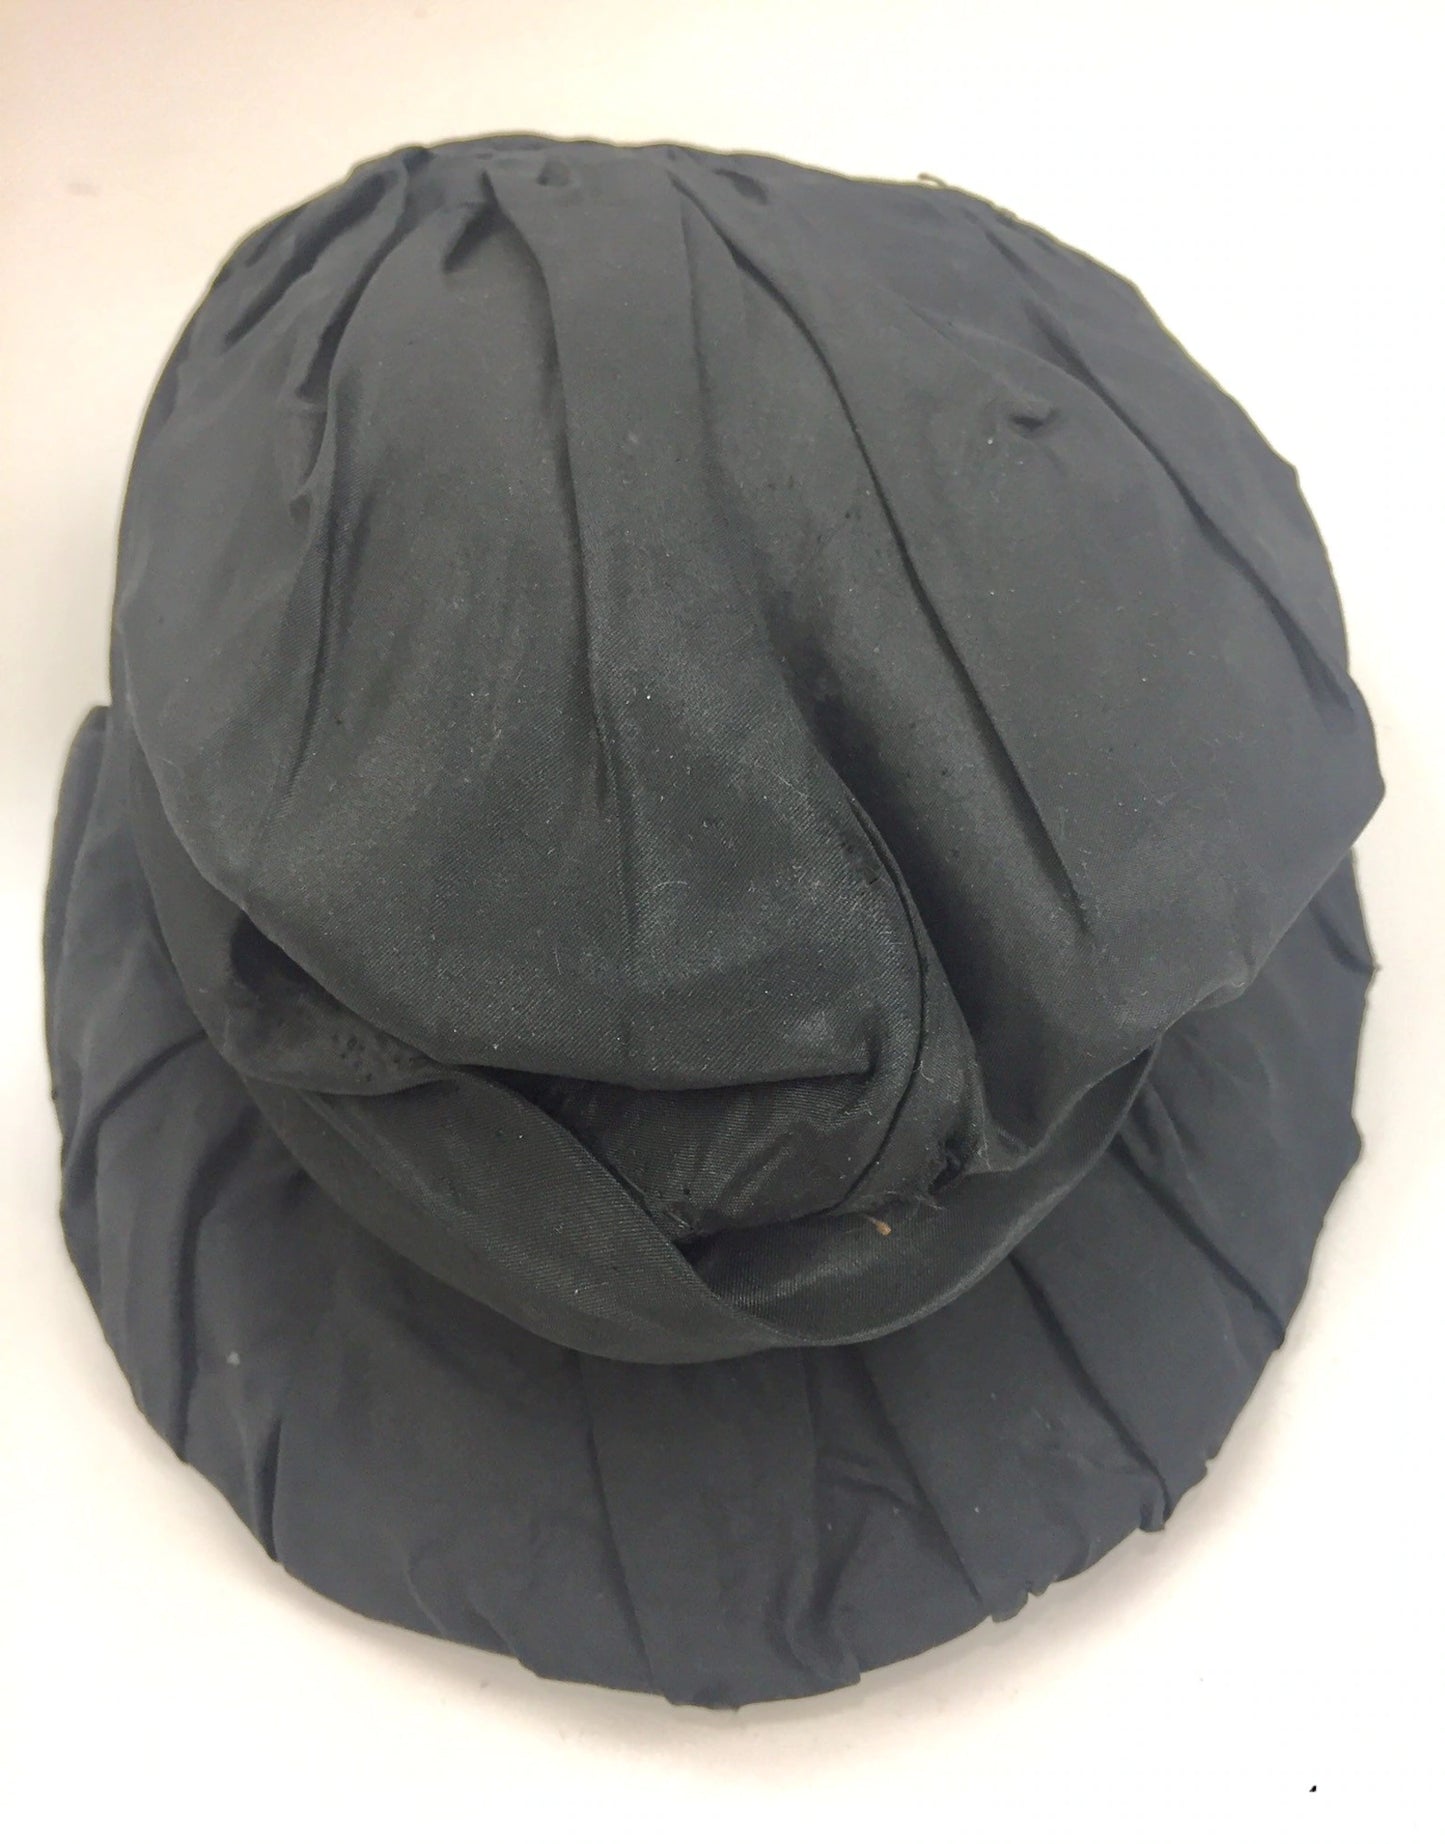 Antique Victorian Bonnet, Black Satin Gathered Mourning Bonnet with modest Brim, Vintage Womens Victorian Clothing, Civil War Era